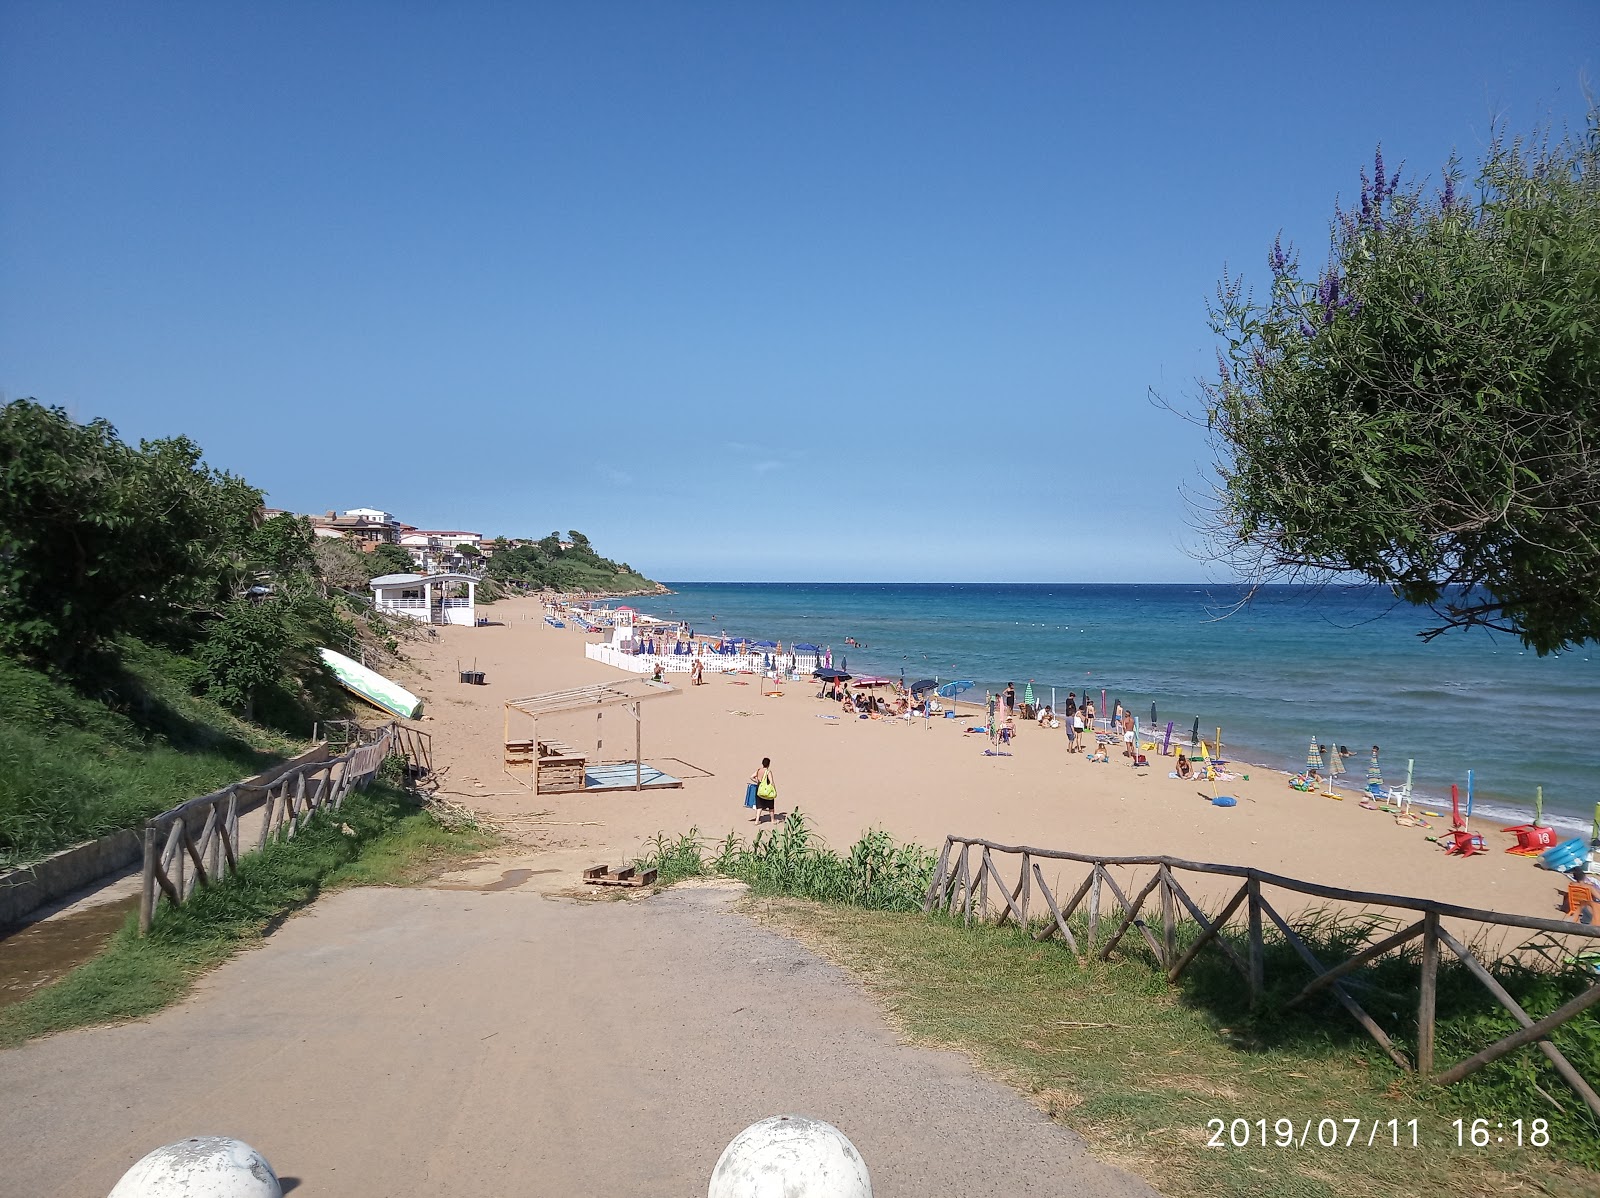 Foto de Spiaggia Rossa con playa amplia